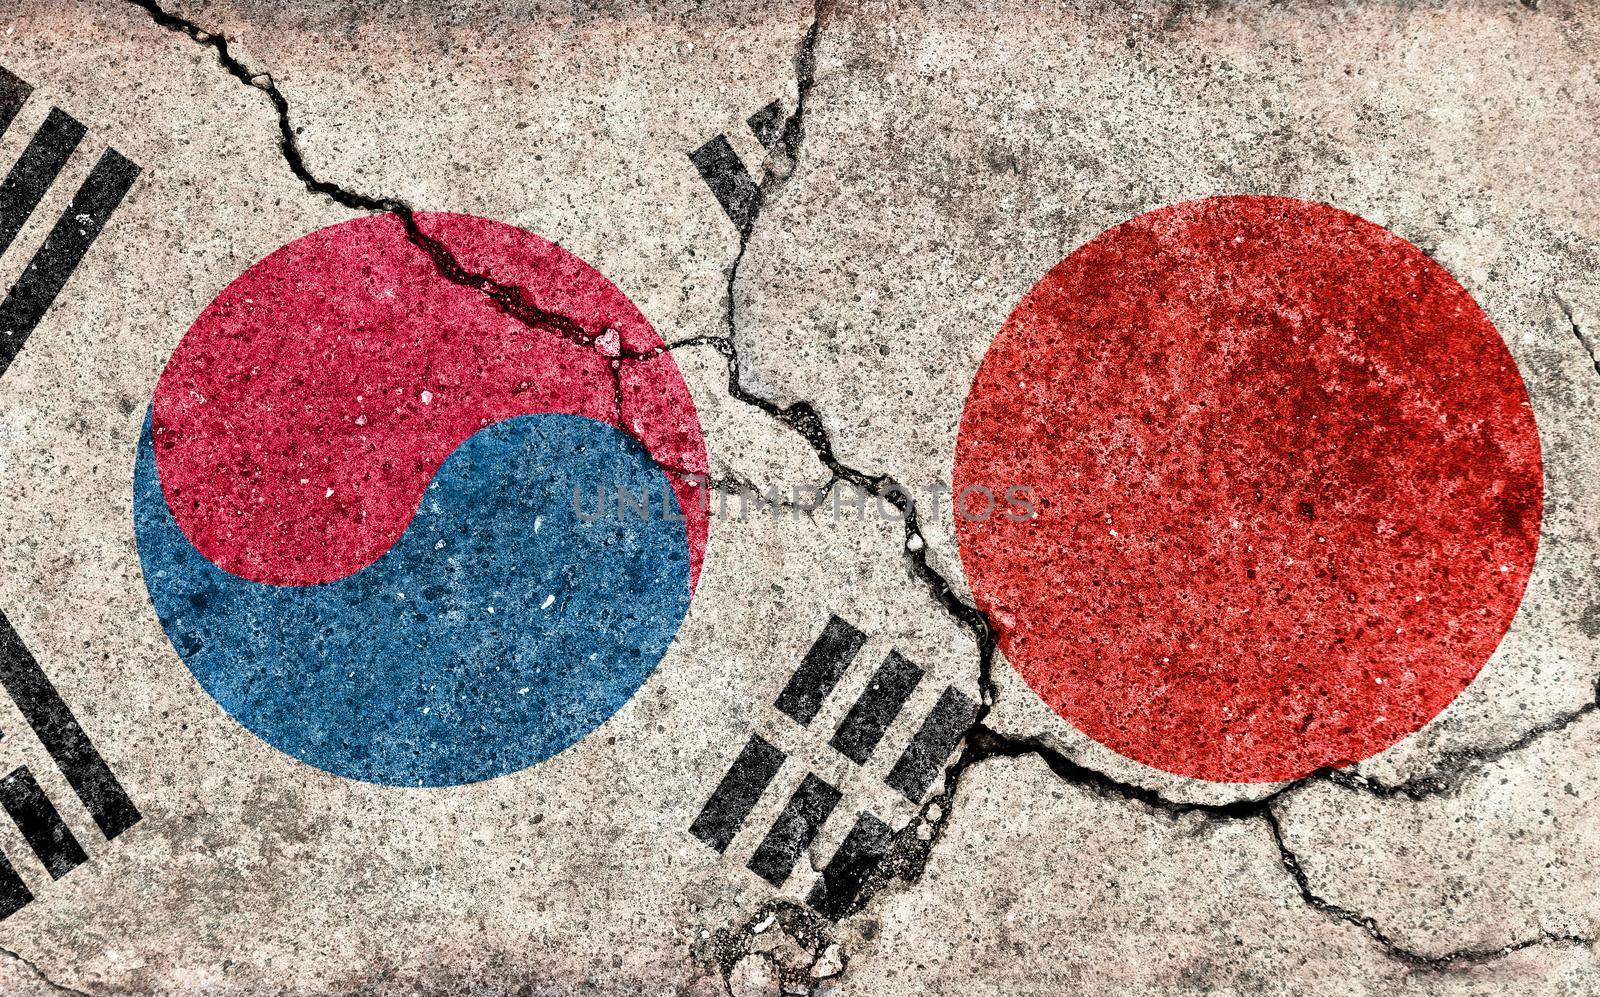 Grunge country flag illustration (cracked concrete background) / Japan vs South korea (Political or economic conflict) by barks